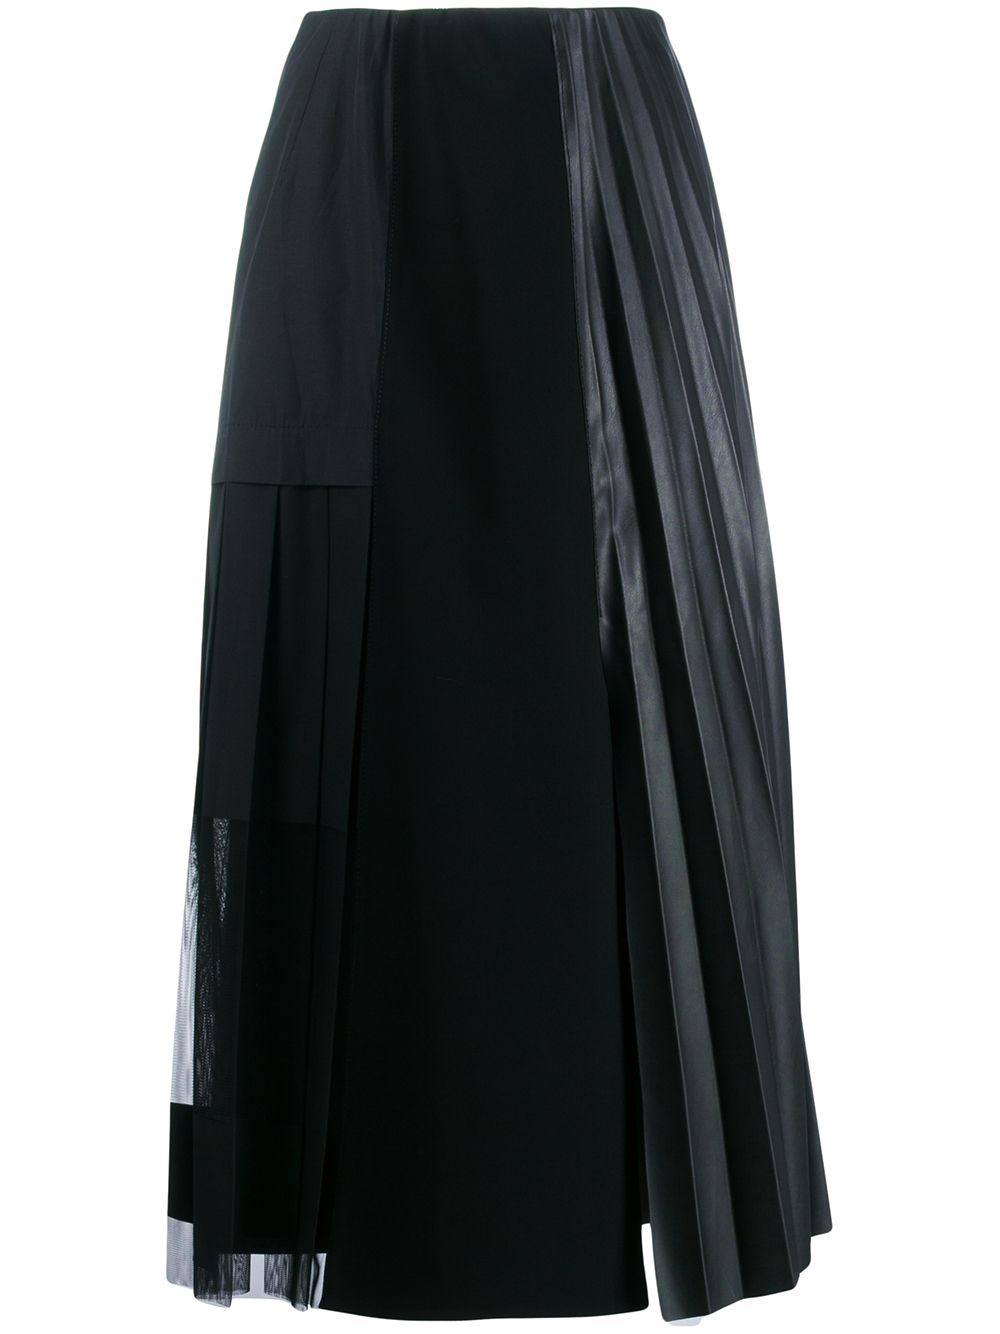 фото Dorothee Schumacher юбка Modern Gloss в технике пэчворк